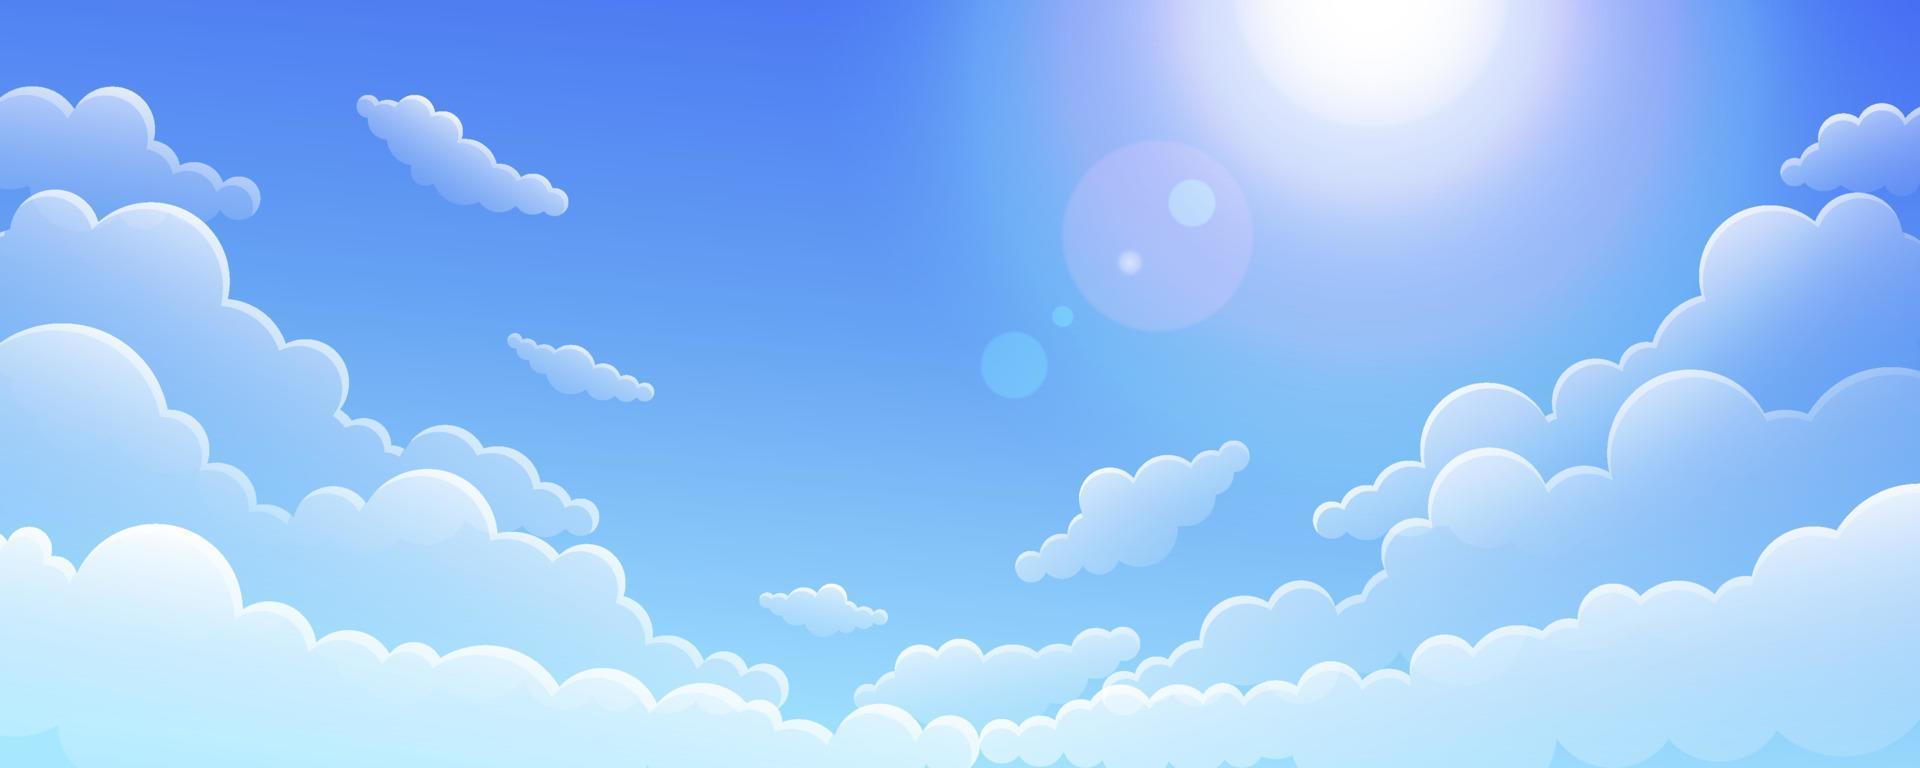 Blue Sky Background vector